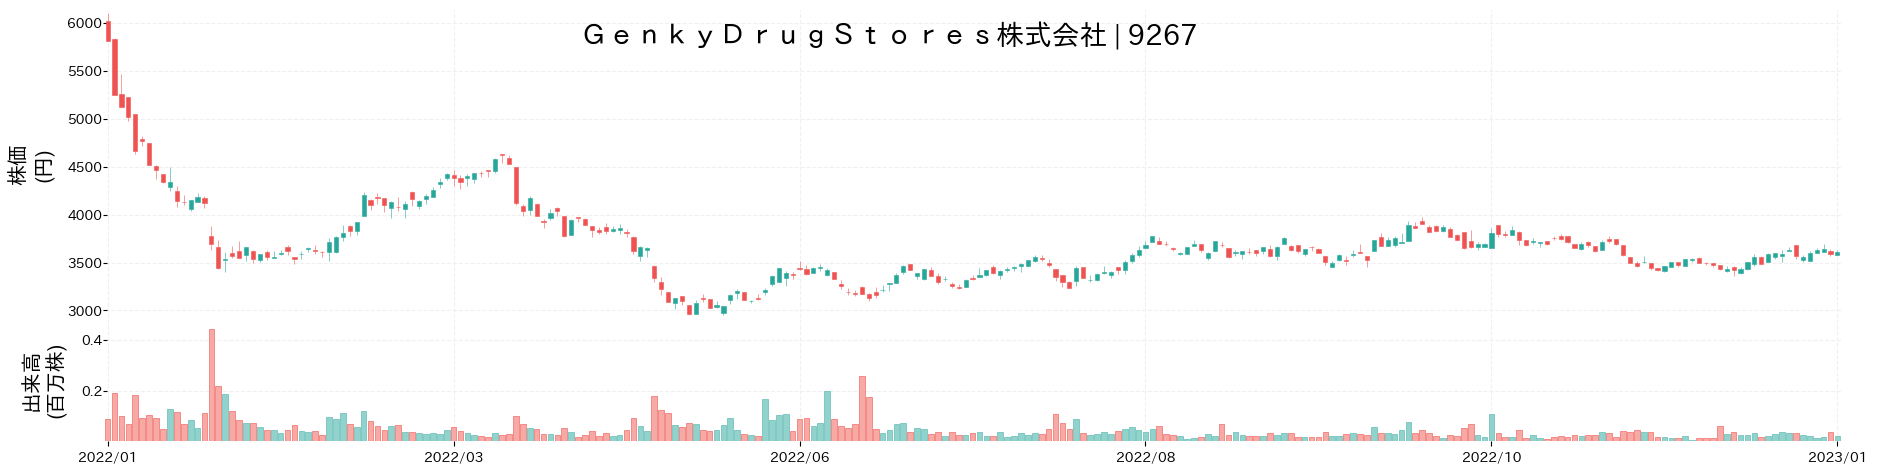 GenkyDrugStoresの株価推移(2022)